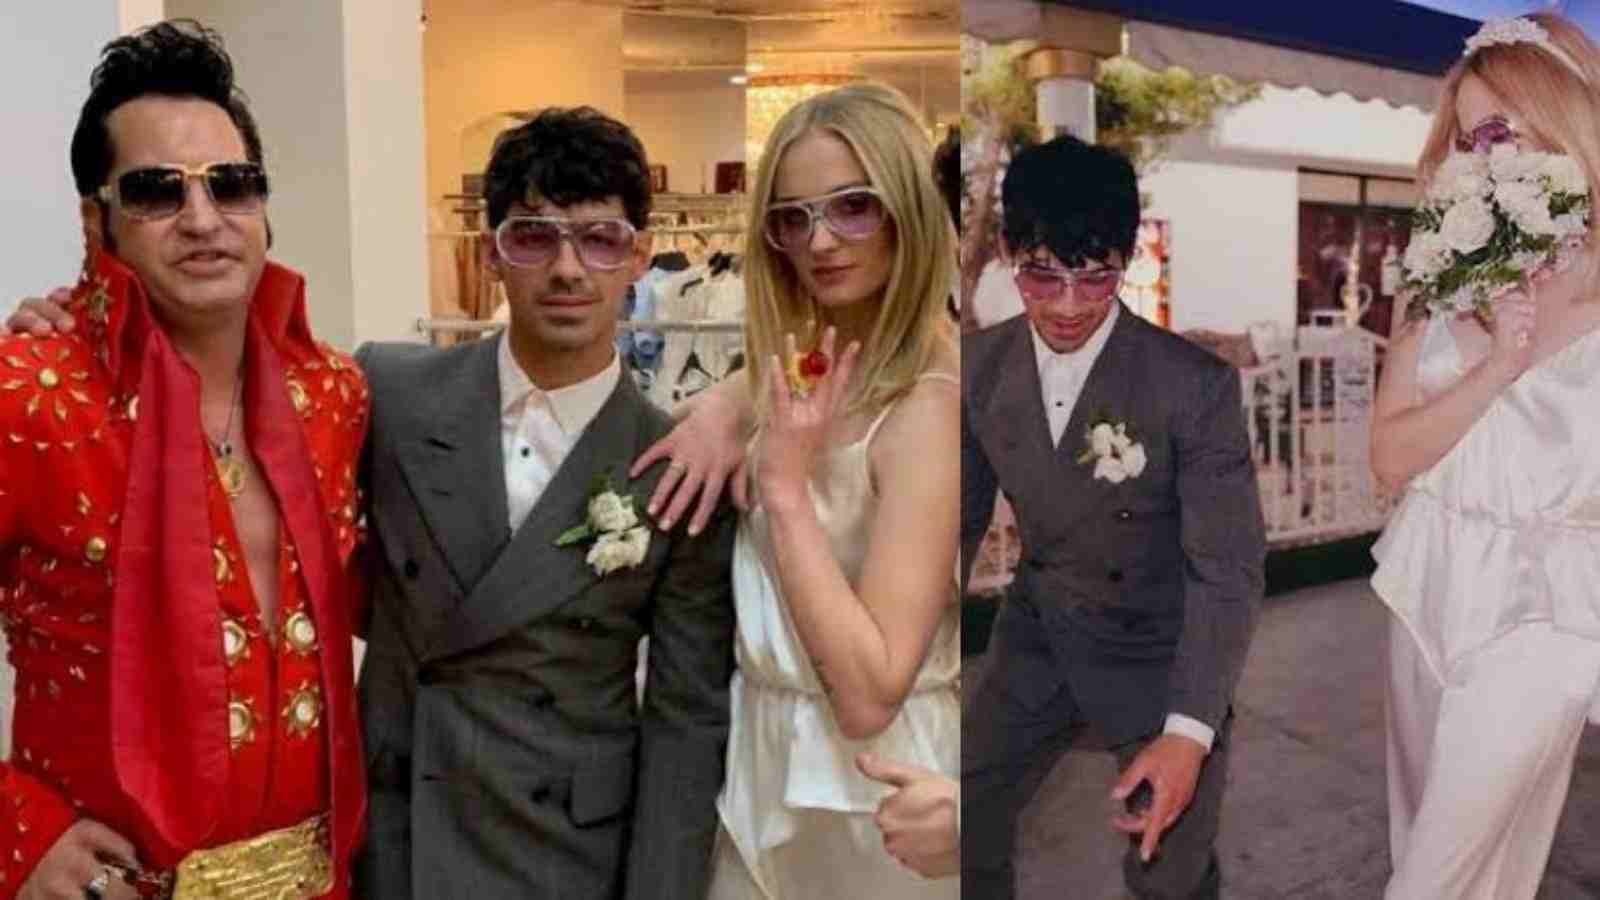 Sophie Turner and Joe Jonas's private wedding ceremony at Las Vegas livestreamed by DJ Diplo